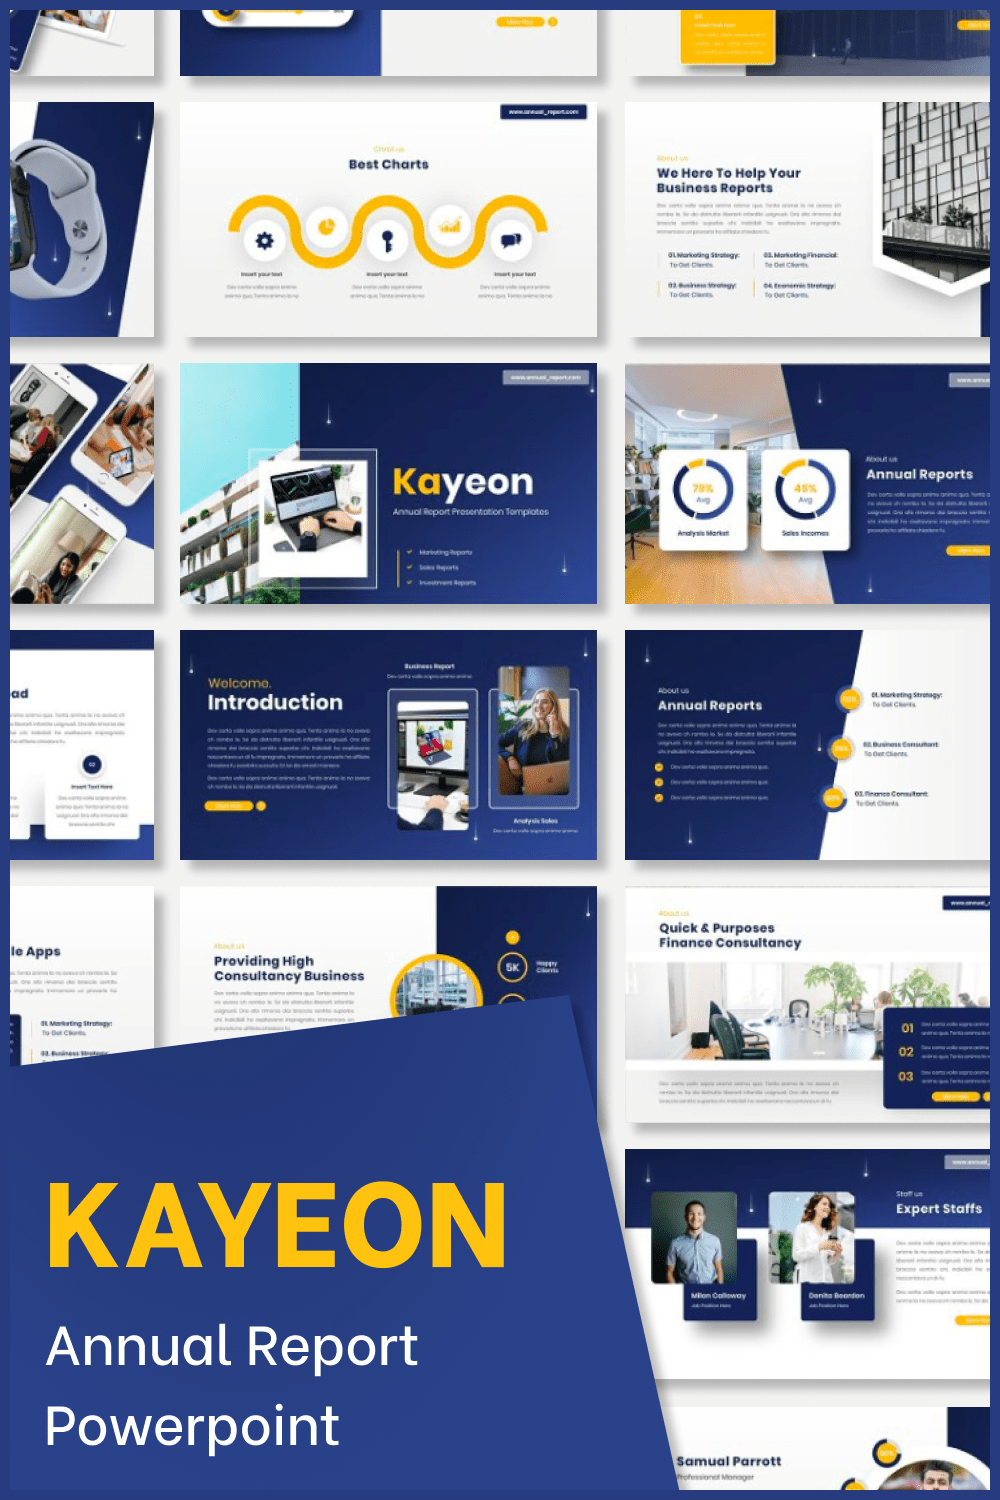 Kayeon - Annual Report Powerpoint Pinterest.